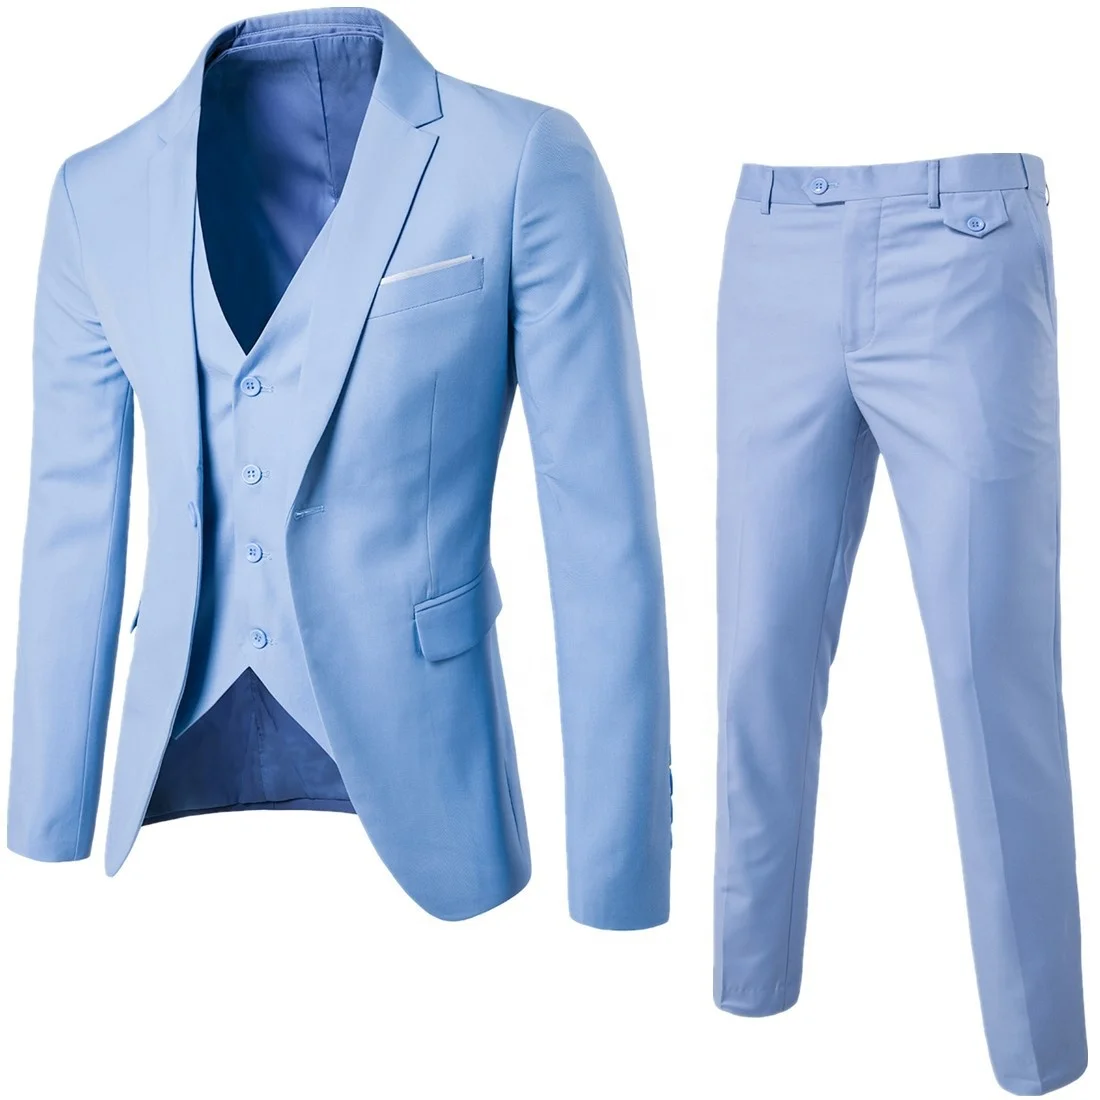 

PATON Morili one button Wedding Party Suits For Man Closure collar 3 Pieces suit Slim Fit, 6 colors